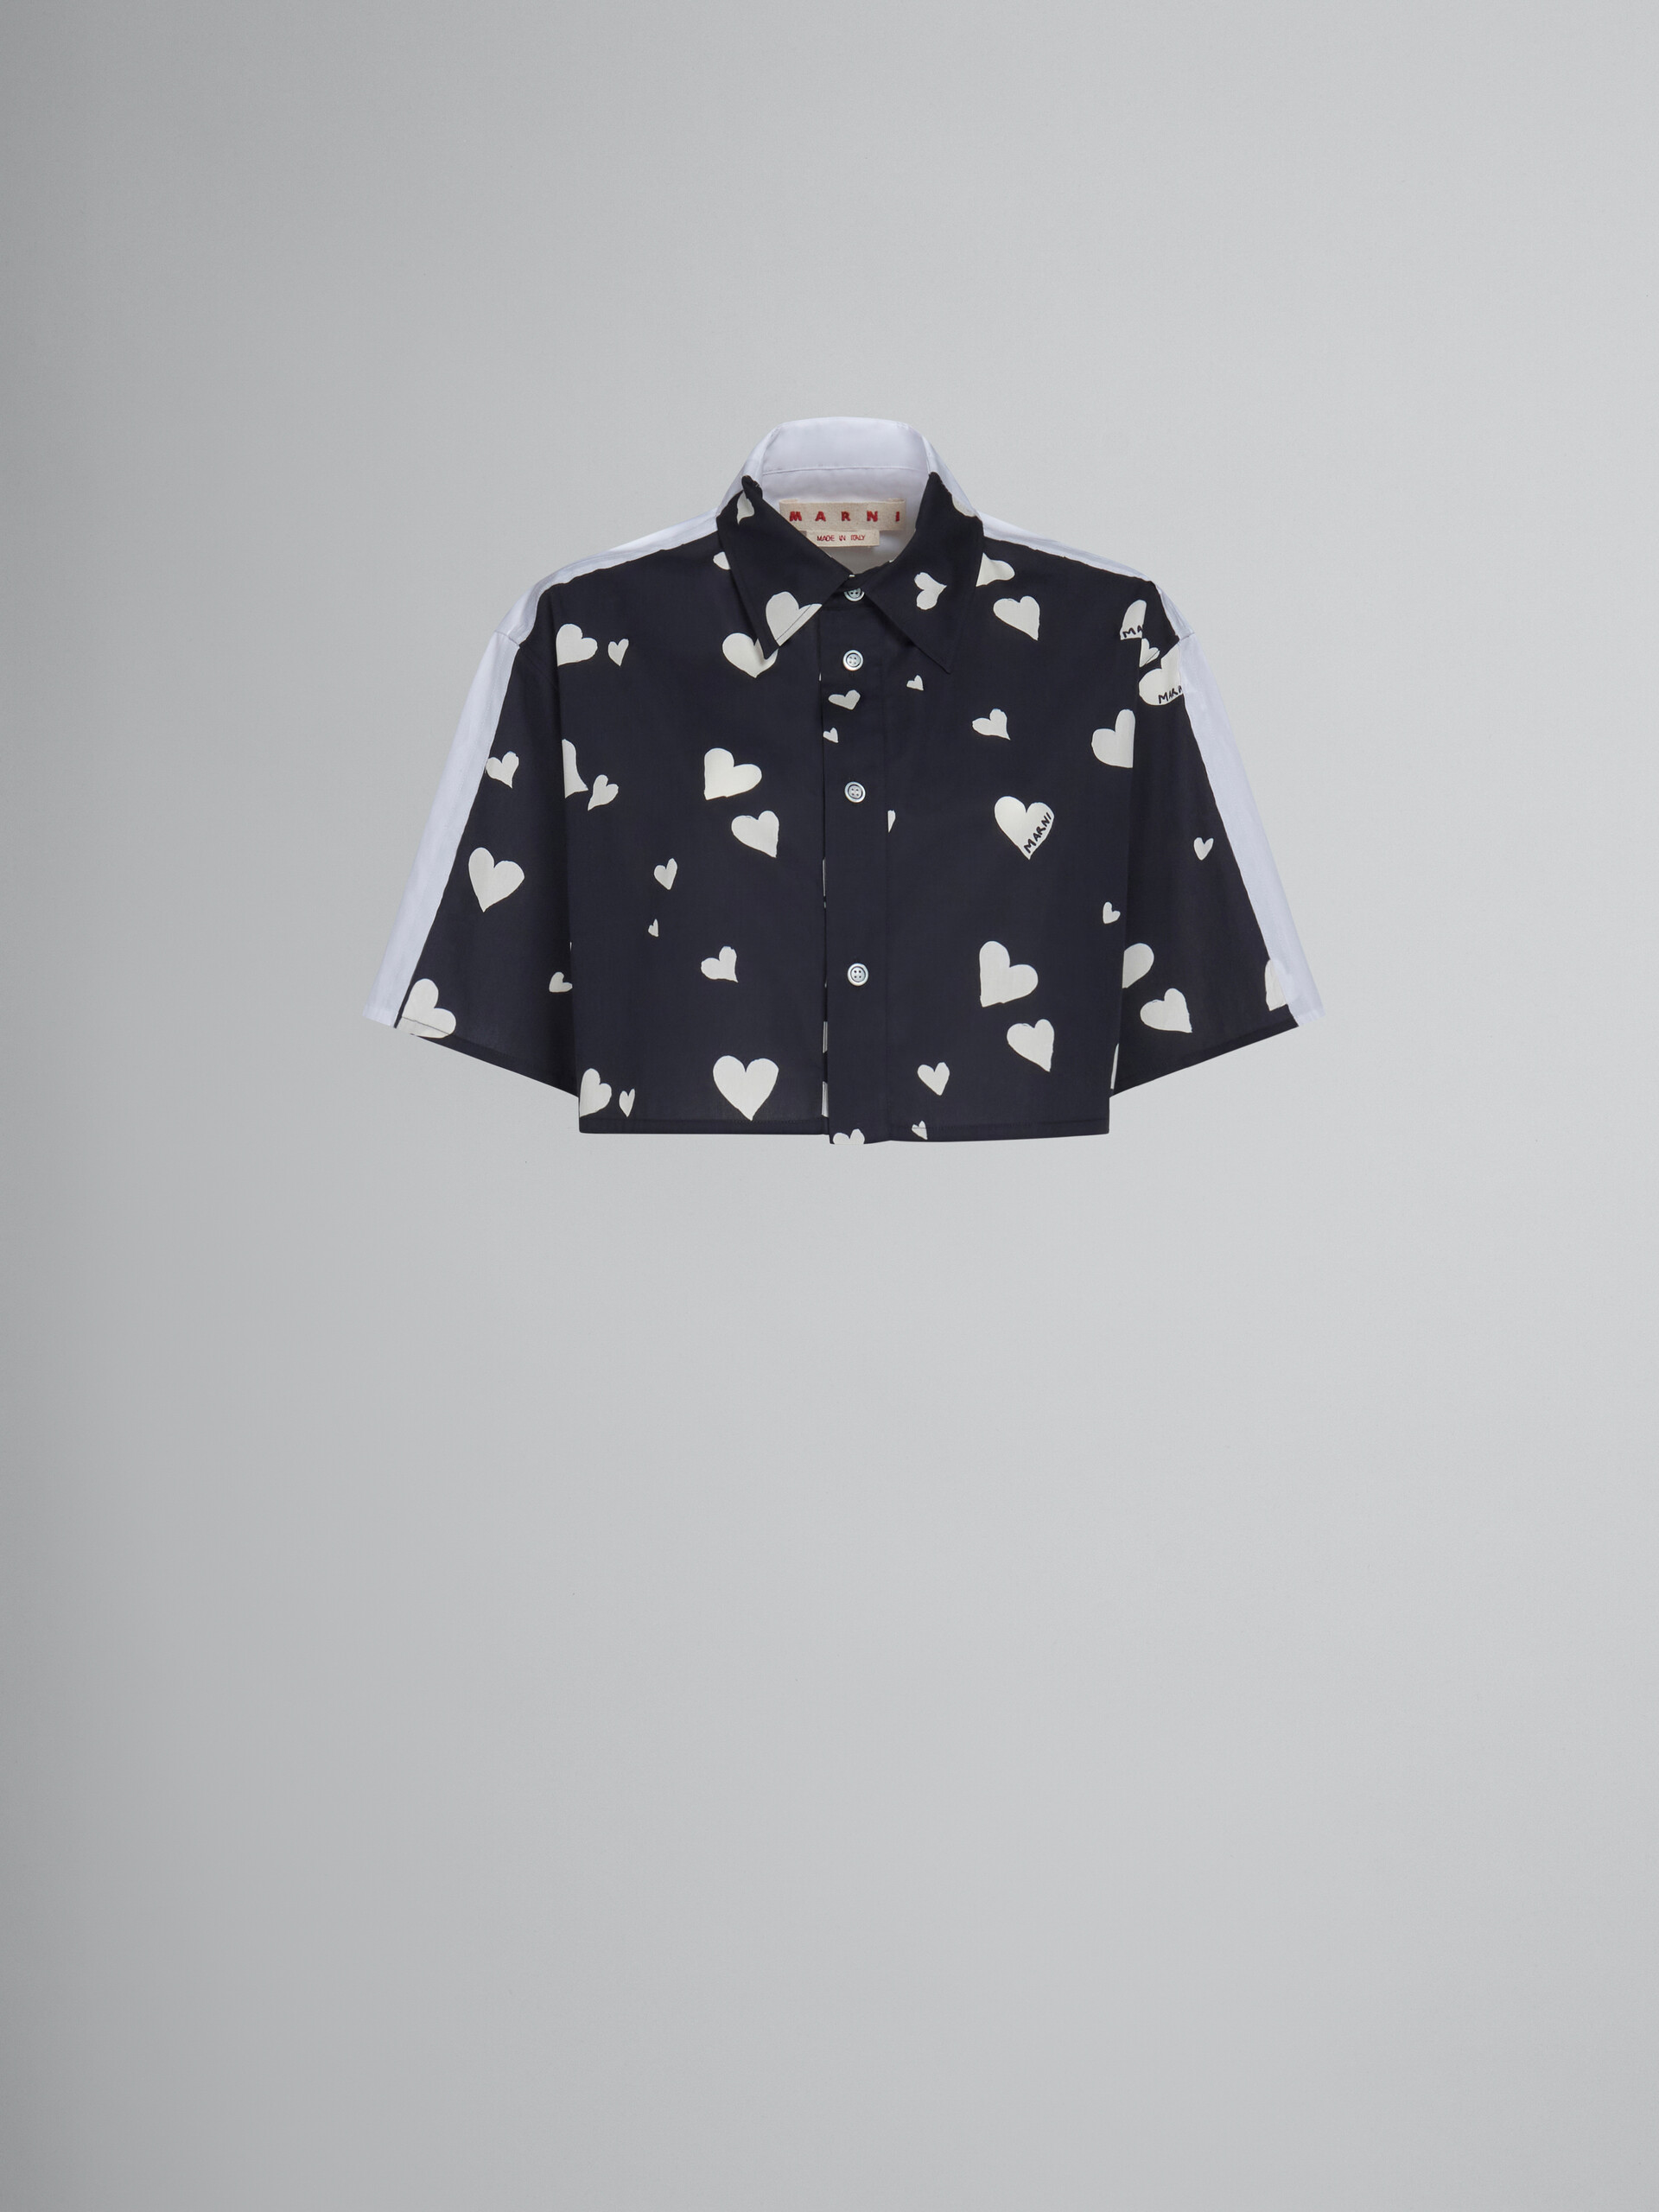 Black poplin shirt with Bunch of Hearts print - Shirts - Image 1